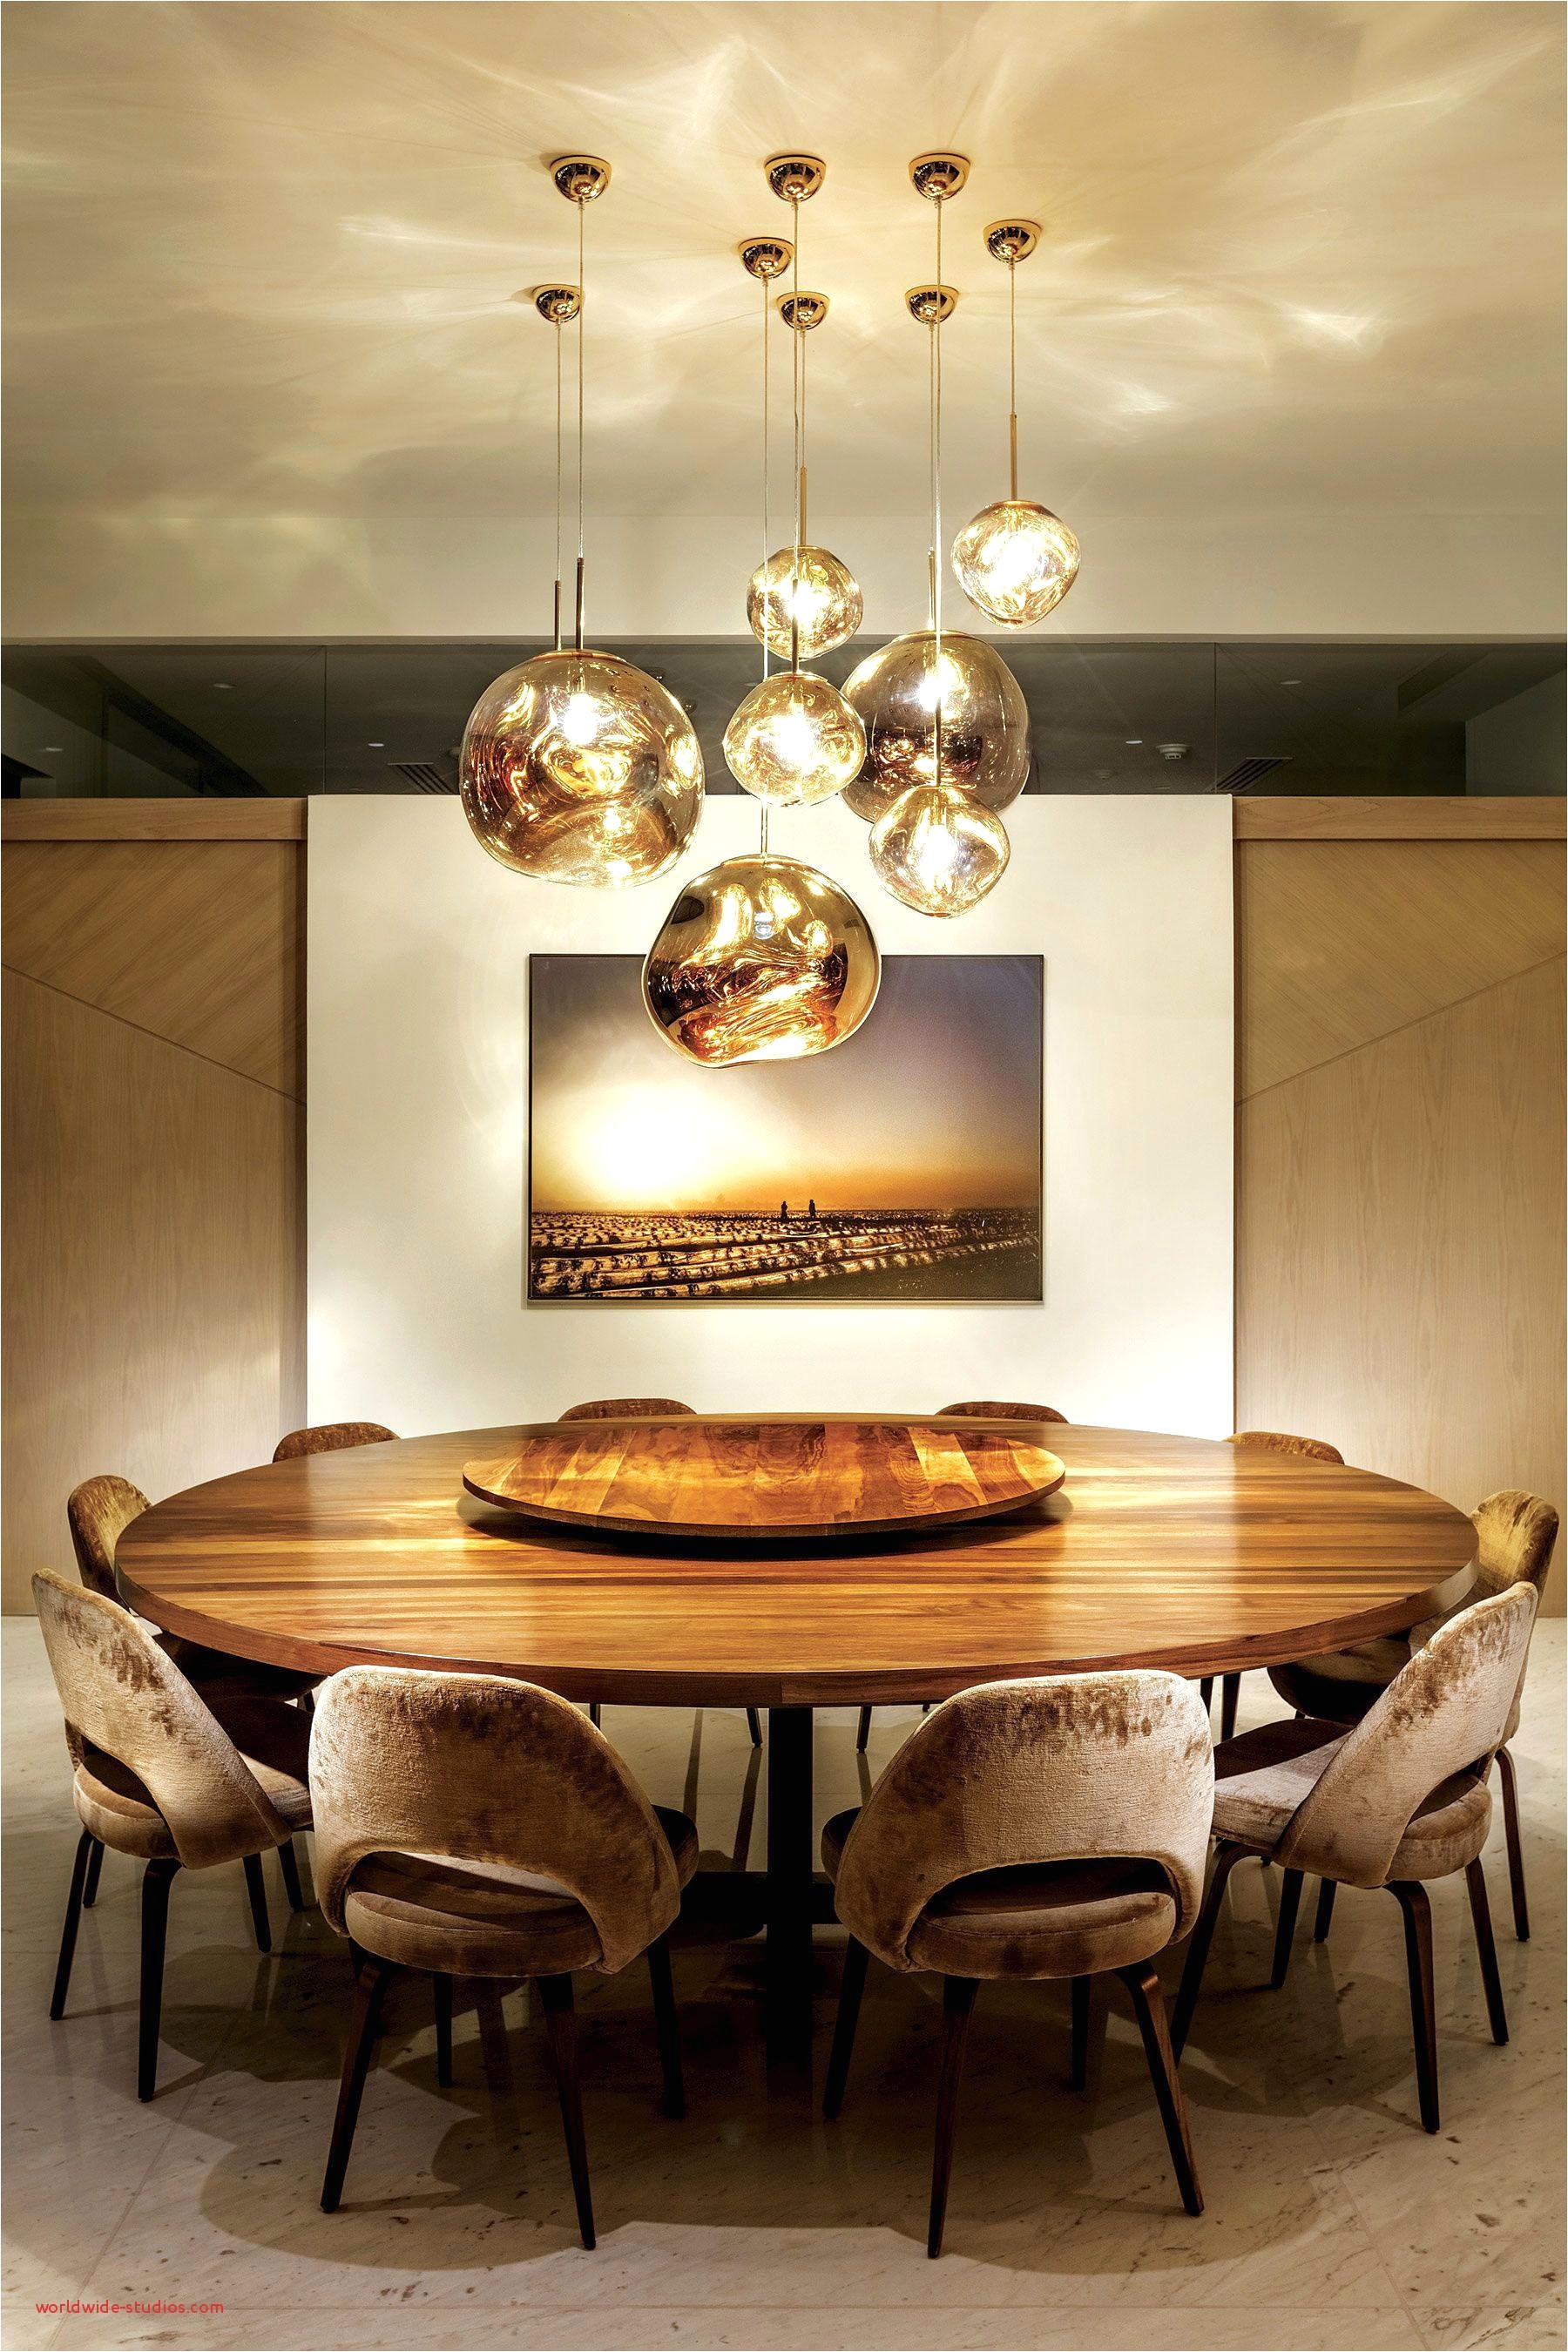 top result diy c table lovely dinette lighting fixtures lighting 0d design ideas outdoor party